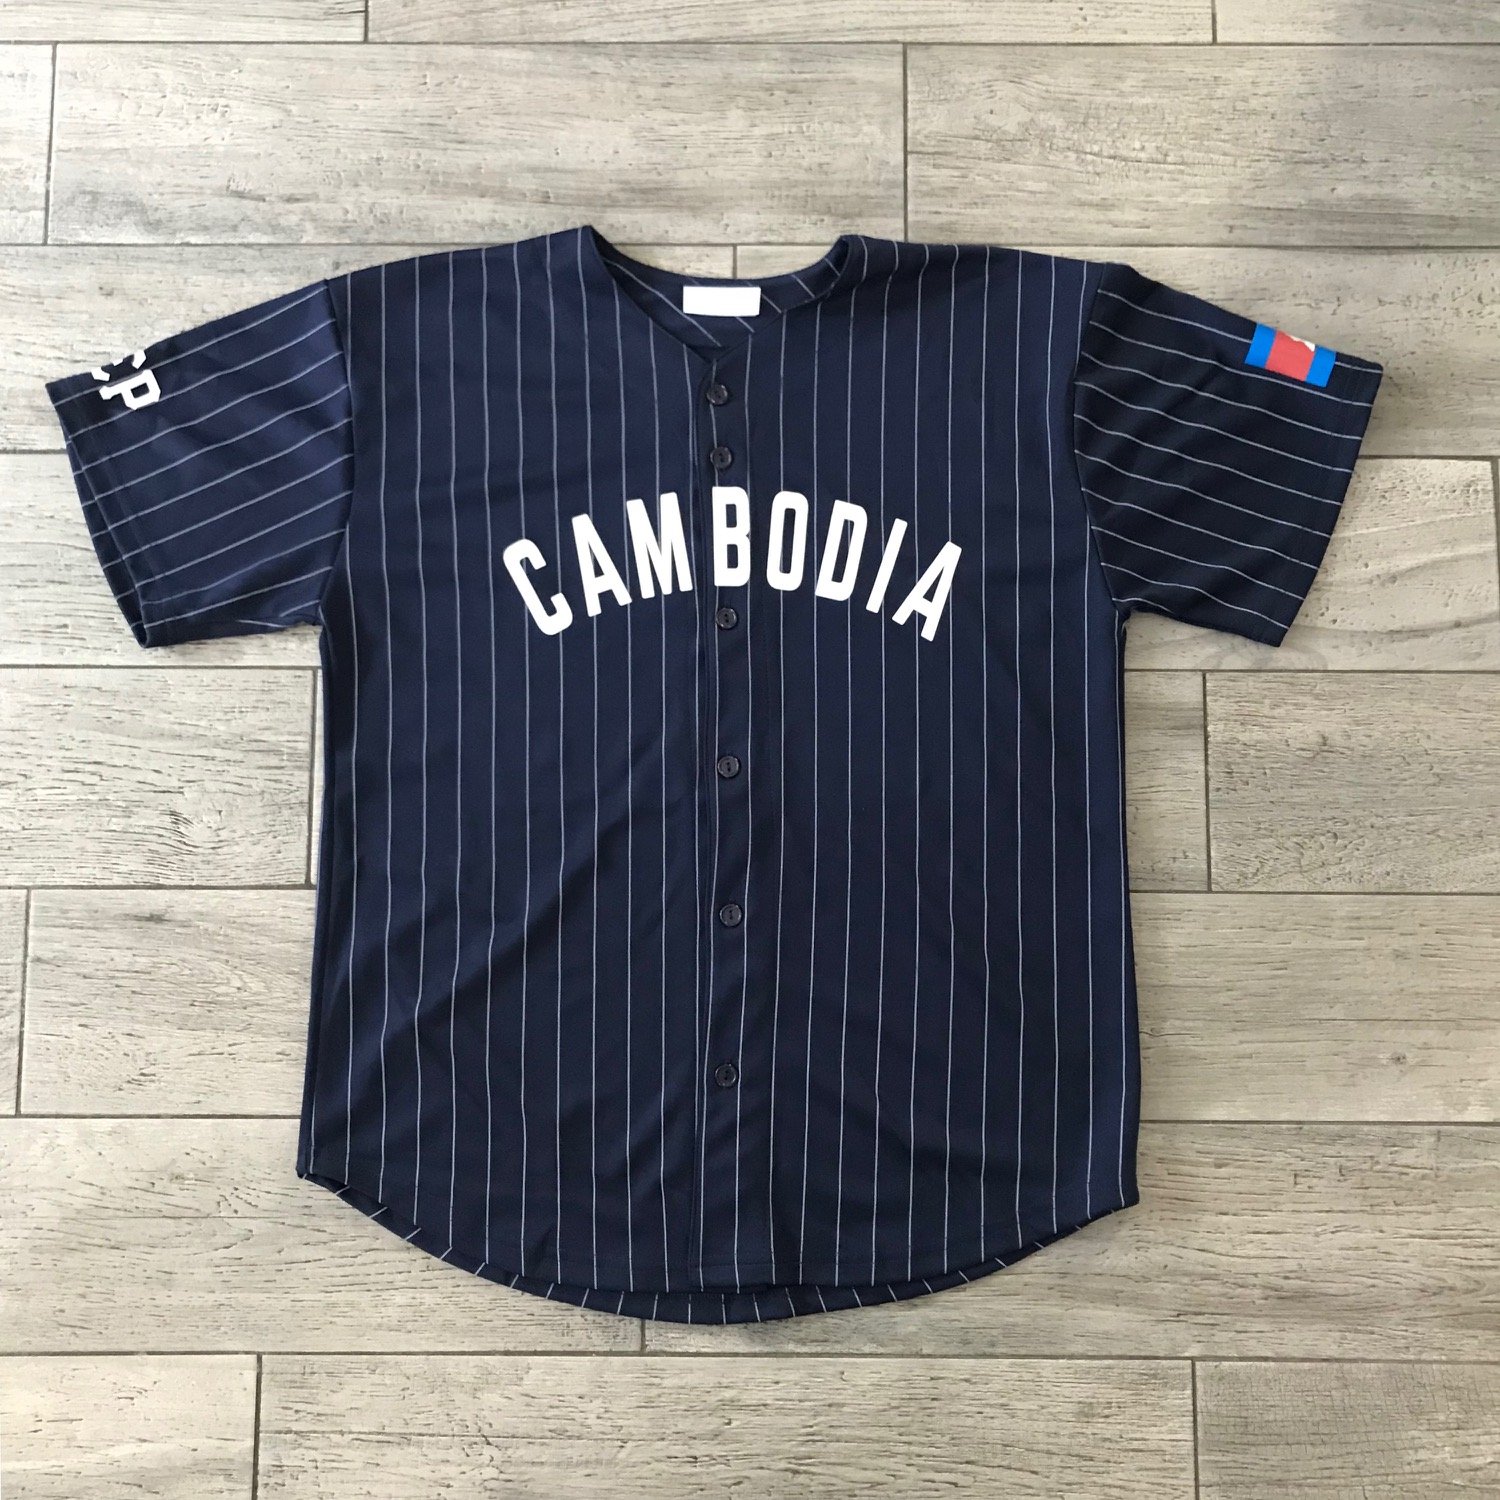 Rep Cambodia — NAVY BLUE PIN STRIPED BASEBALL JERSEY